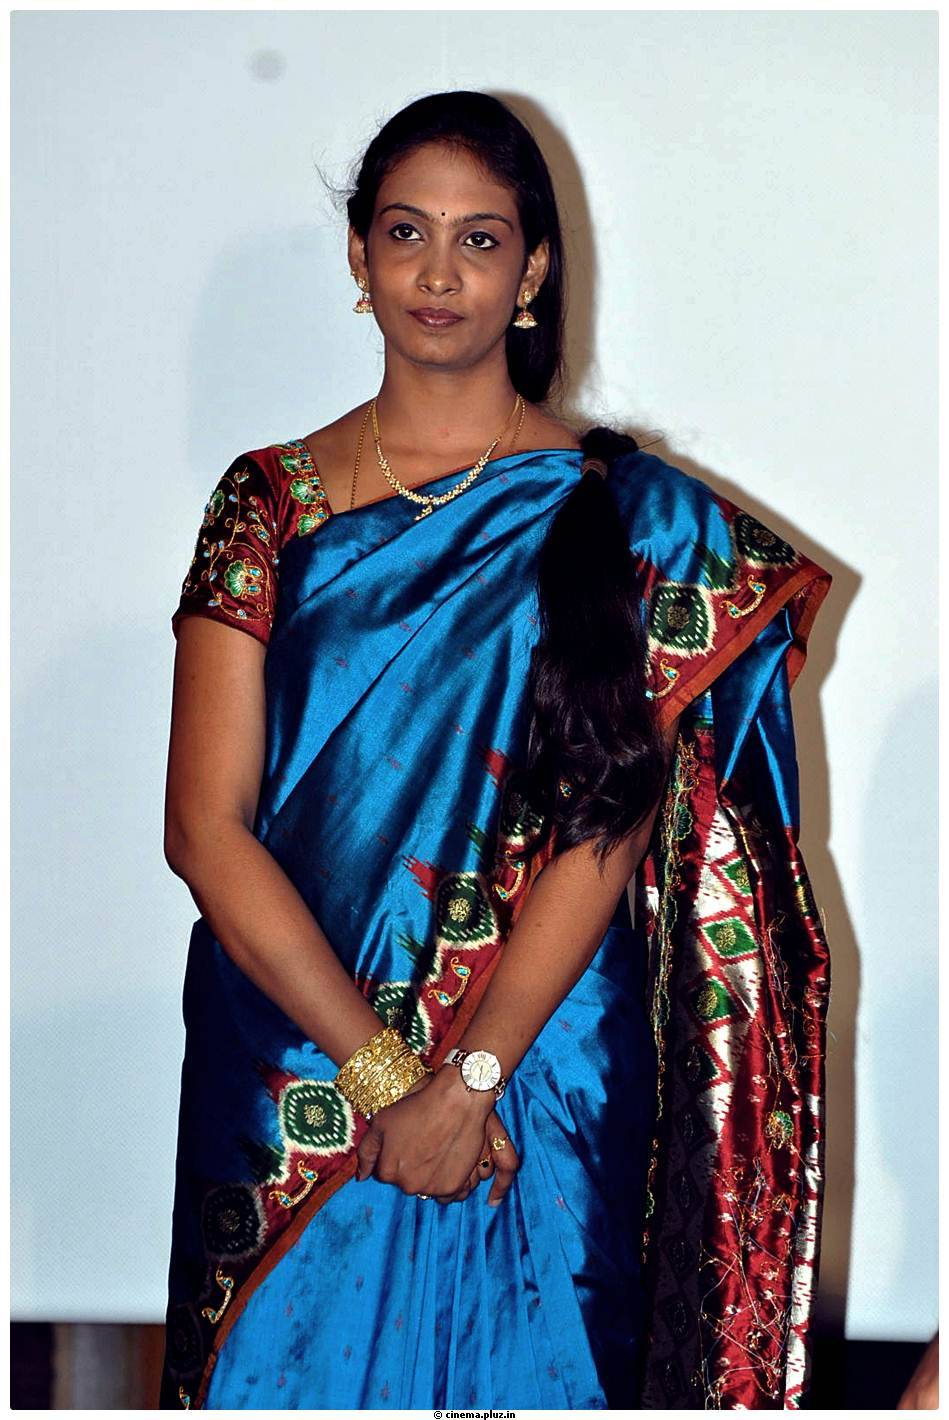 Anjana Sowmya - Bhakti Tho Anjana Soumya Music Album Launch Stills | Picture 490761